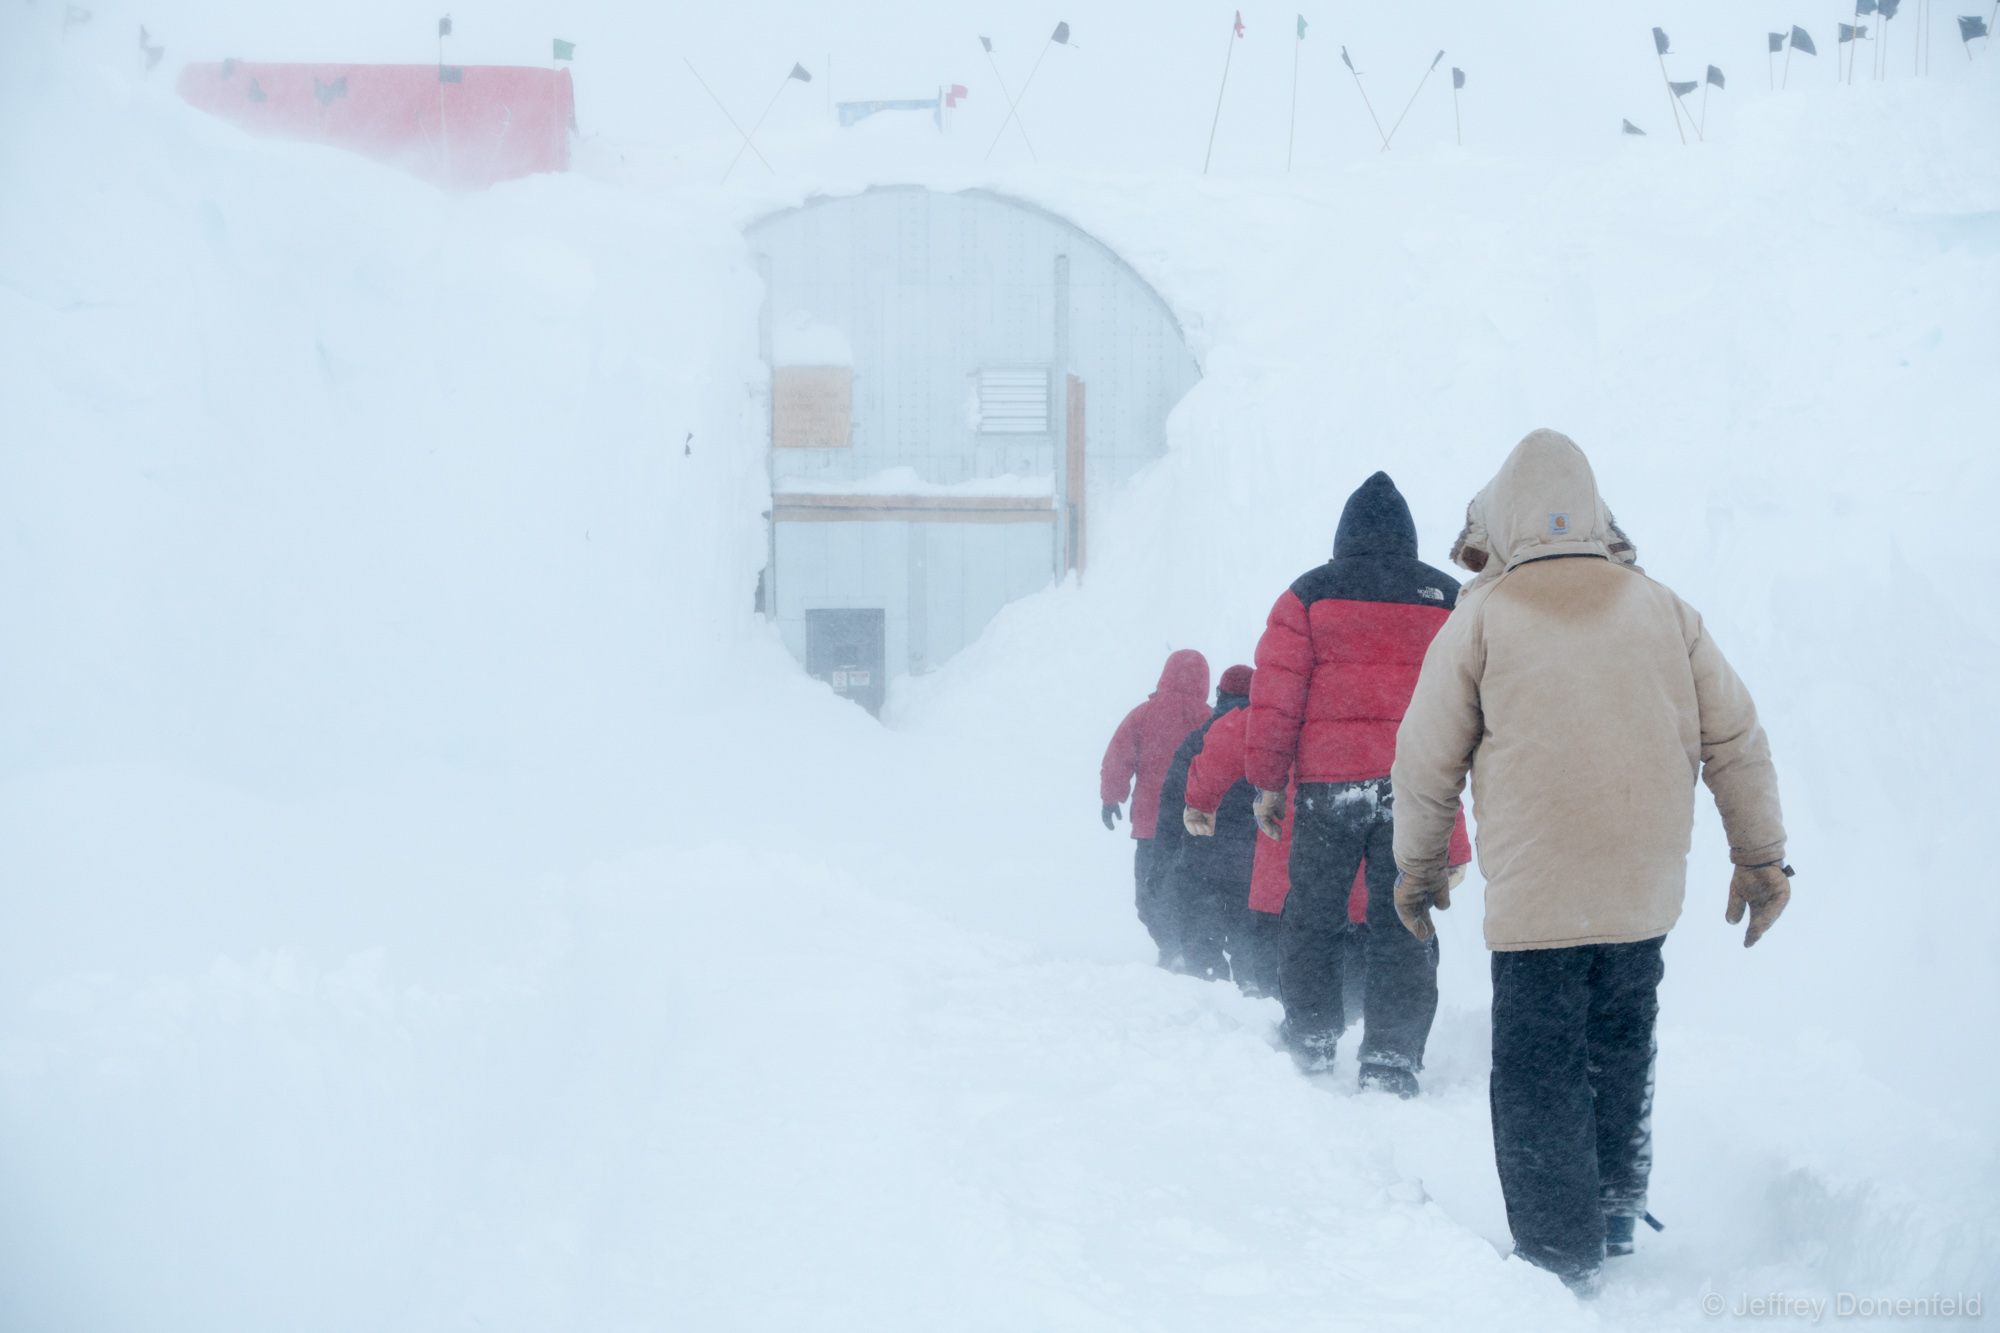 Keeping Warm in Western Antarctica with Darn Tough